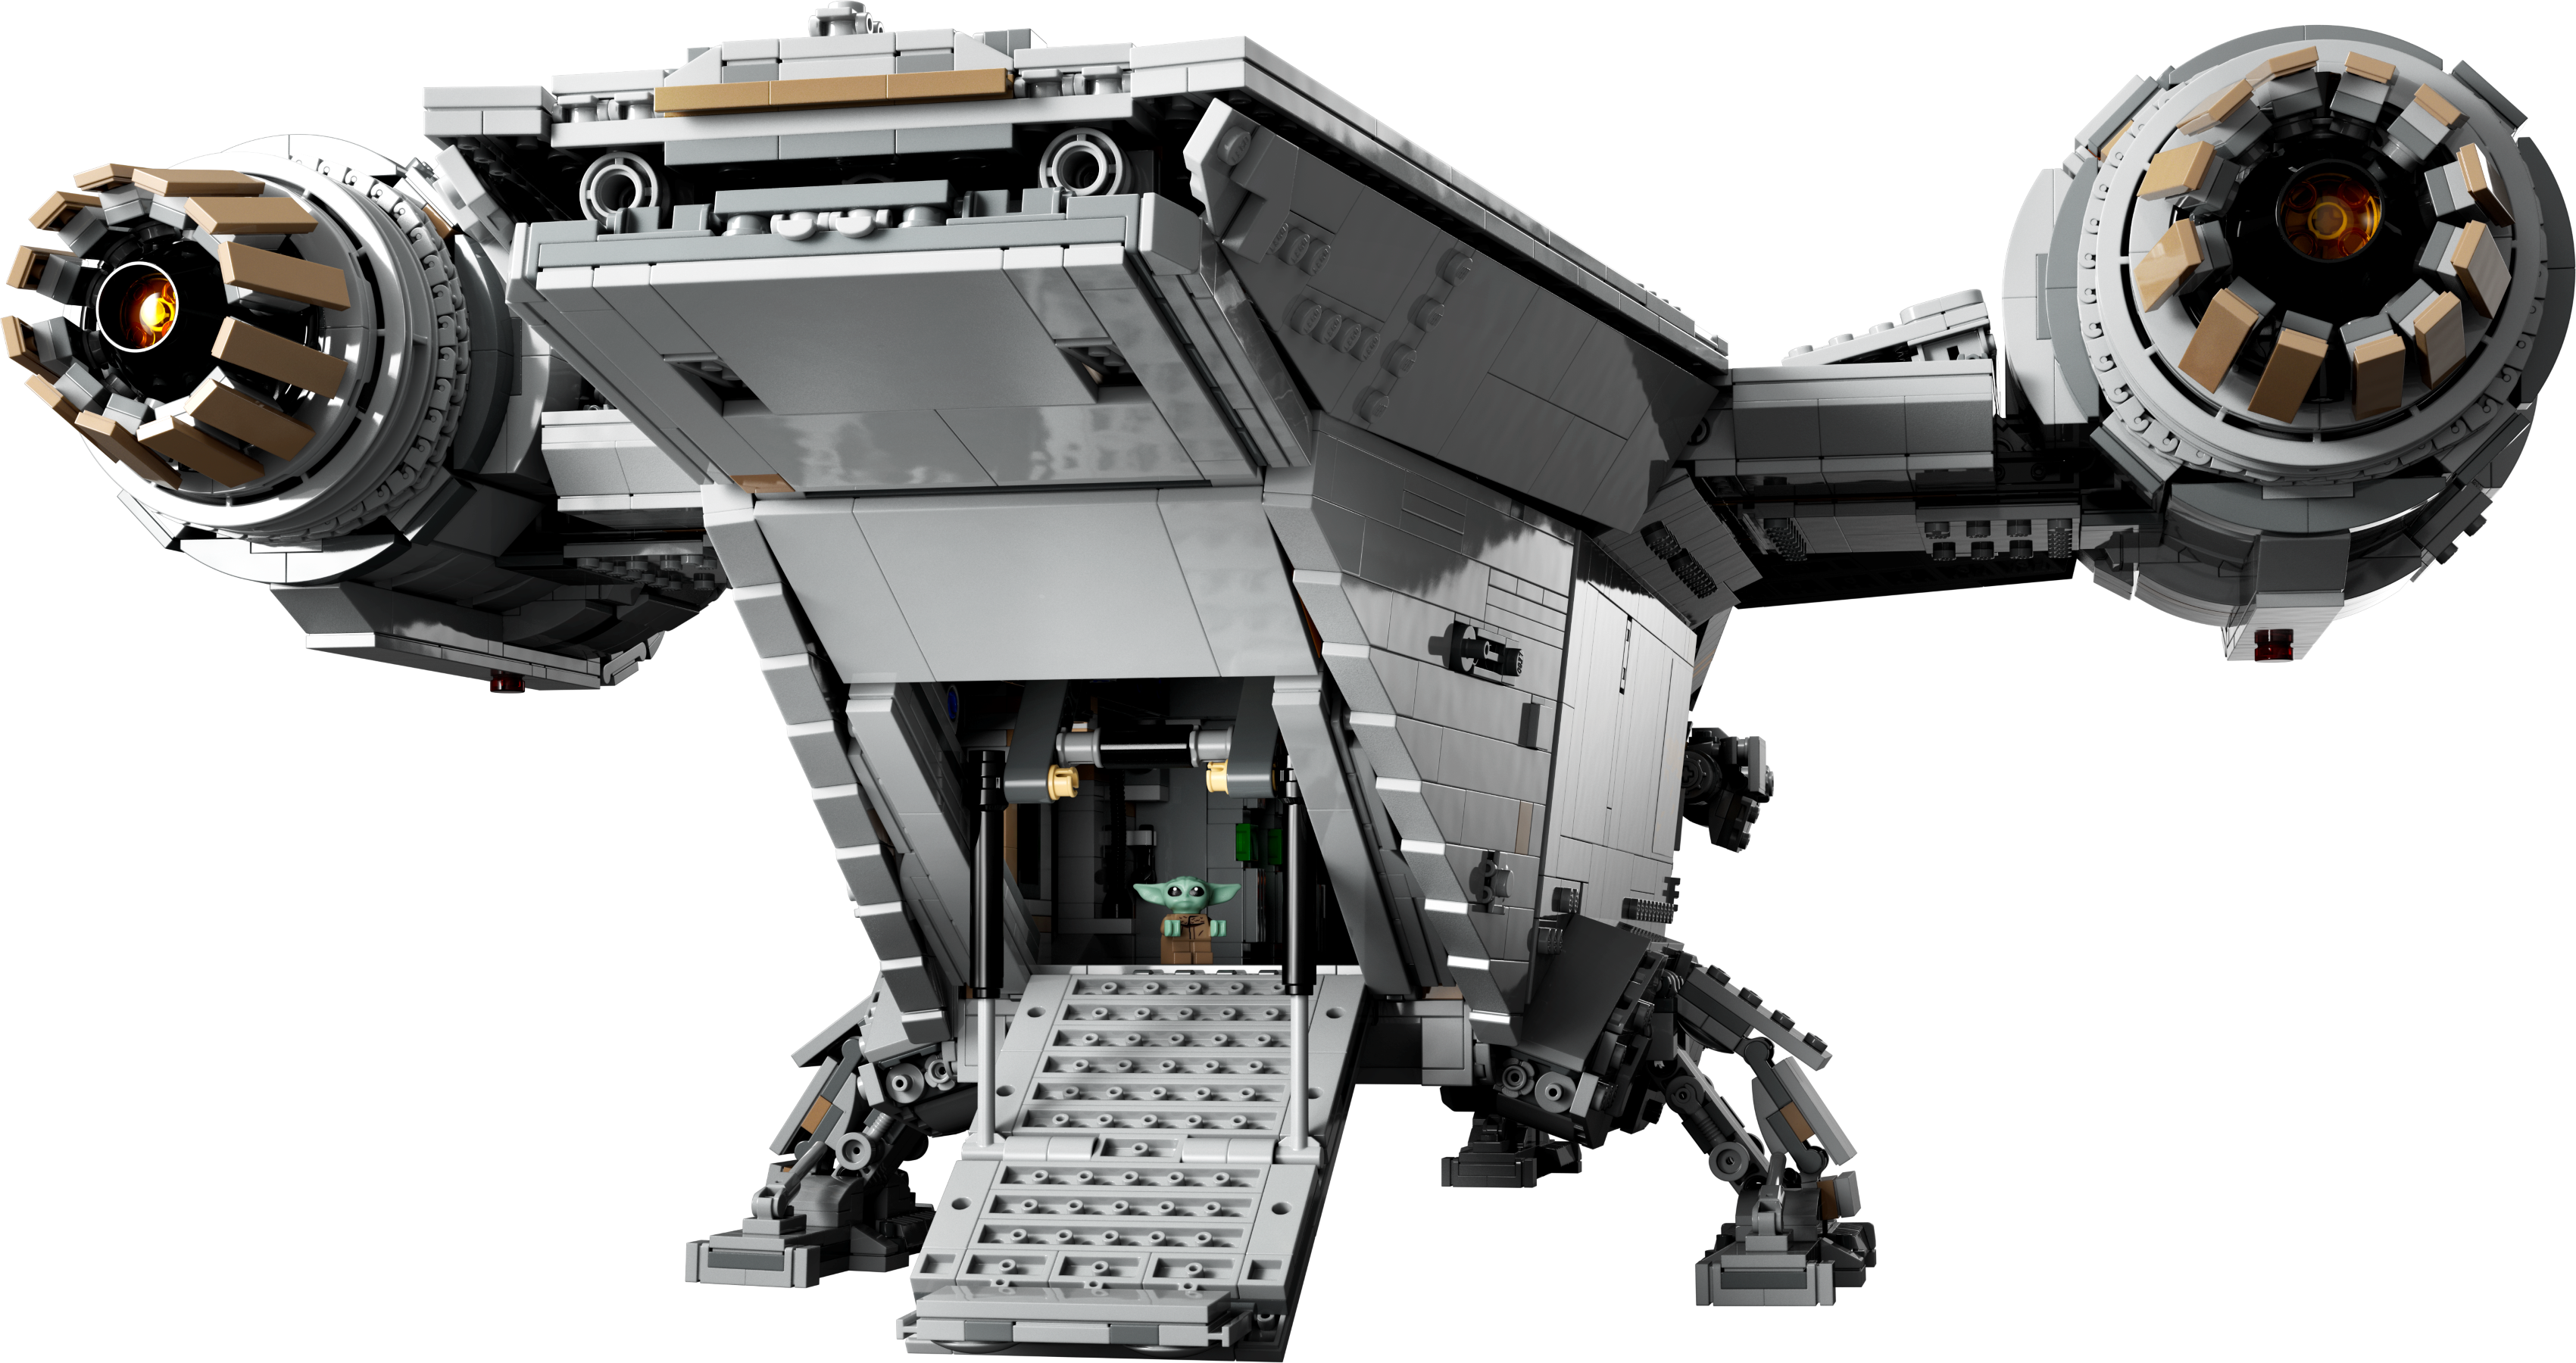 The Razor Crest™ 75292 | Star Wars™ | Buy online at the Official LEGO® Shop  SE